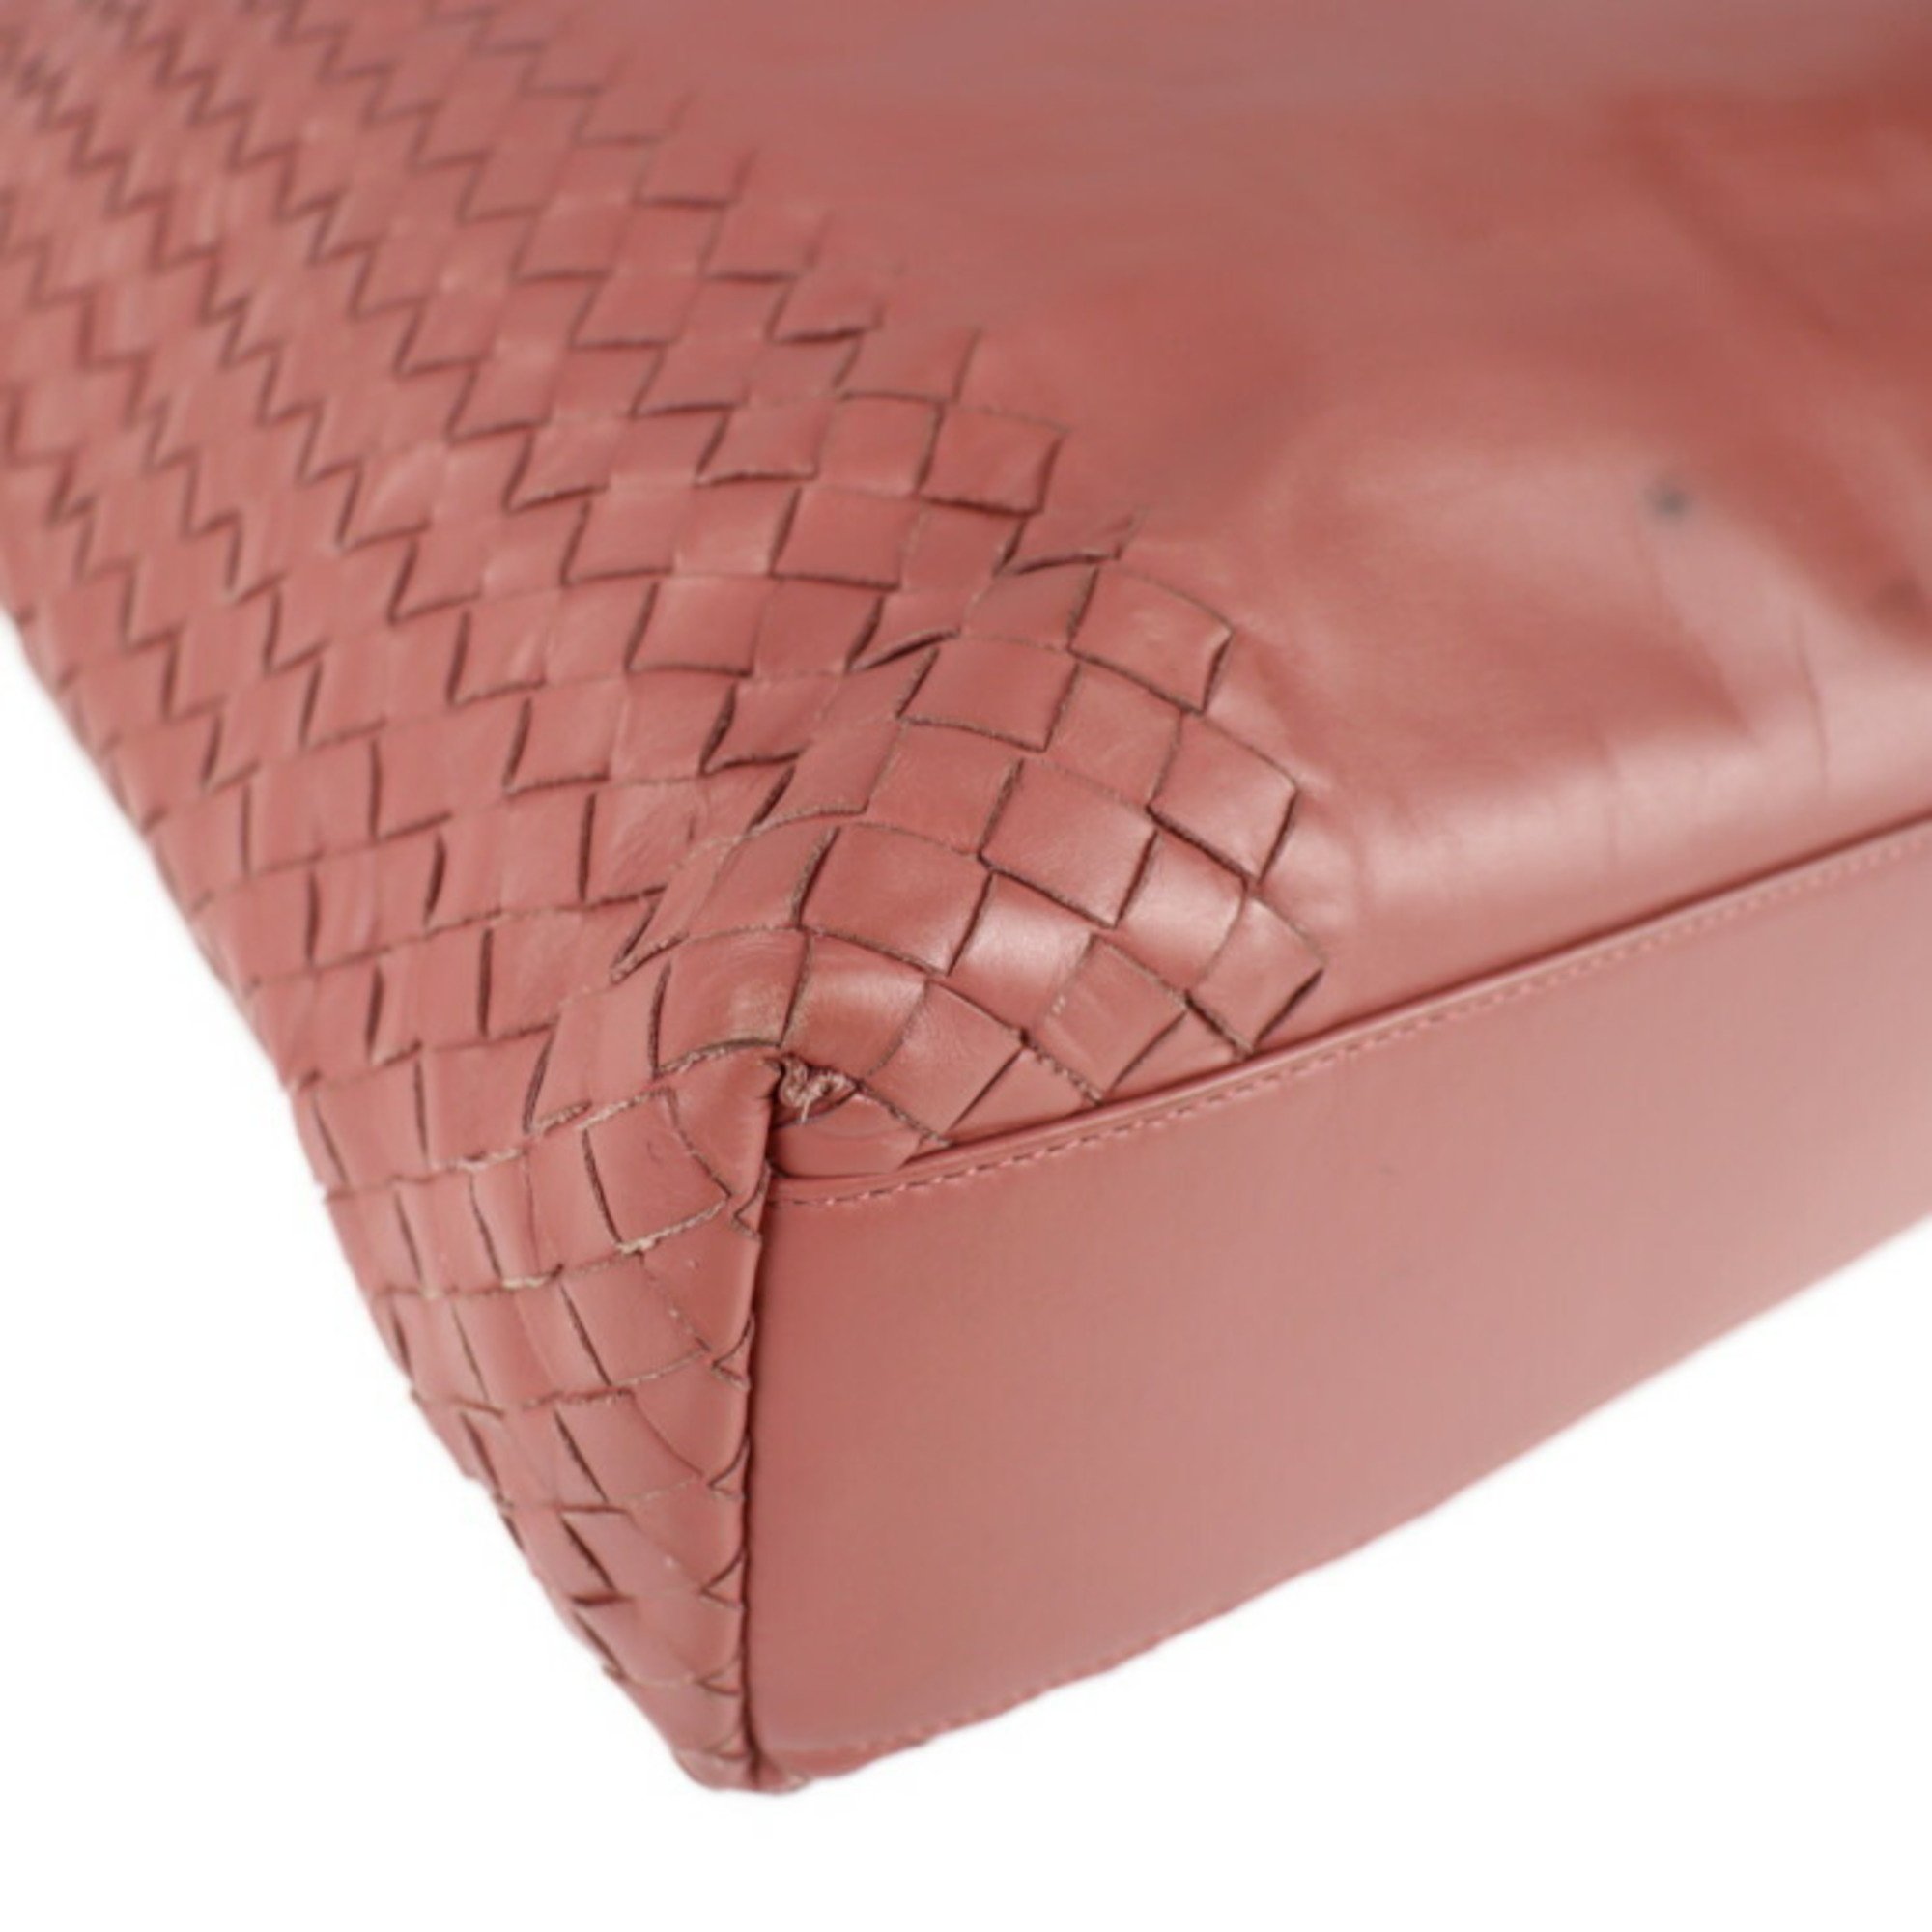 BOTTEGA VENETA Bottega Veneta intrecciato tote bag 386812 leather pink